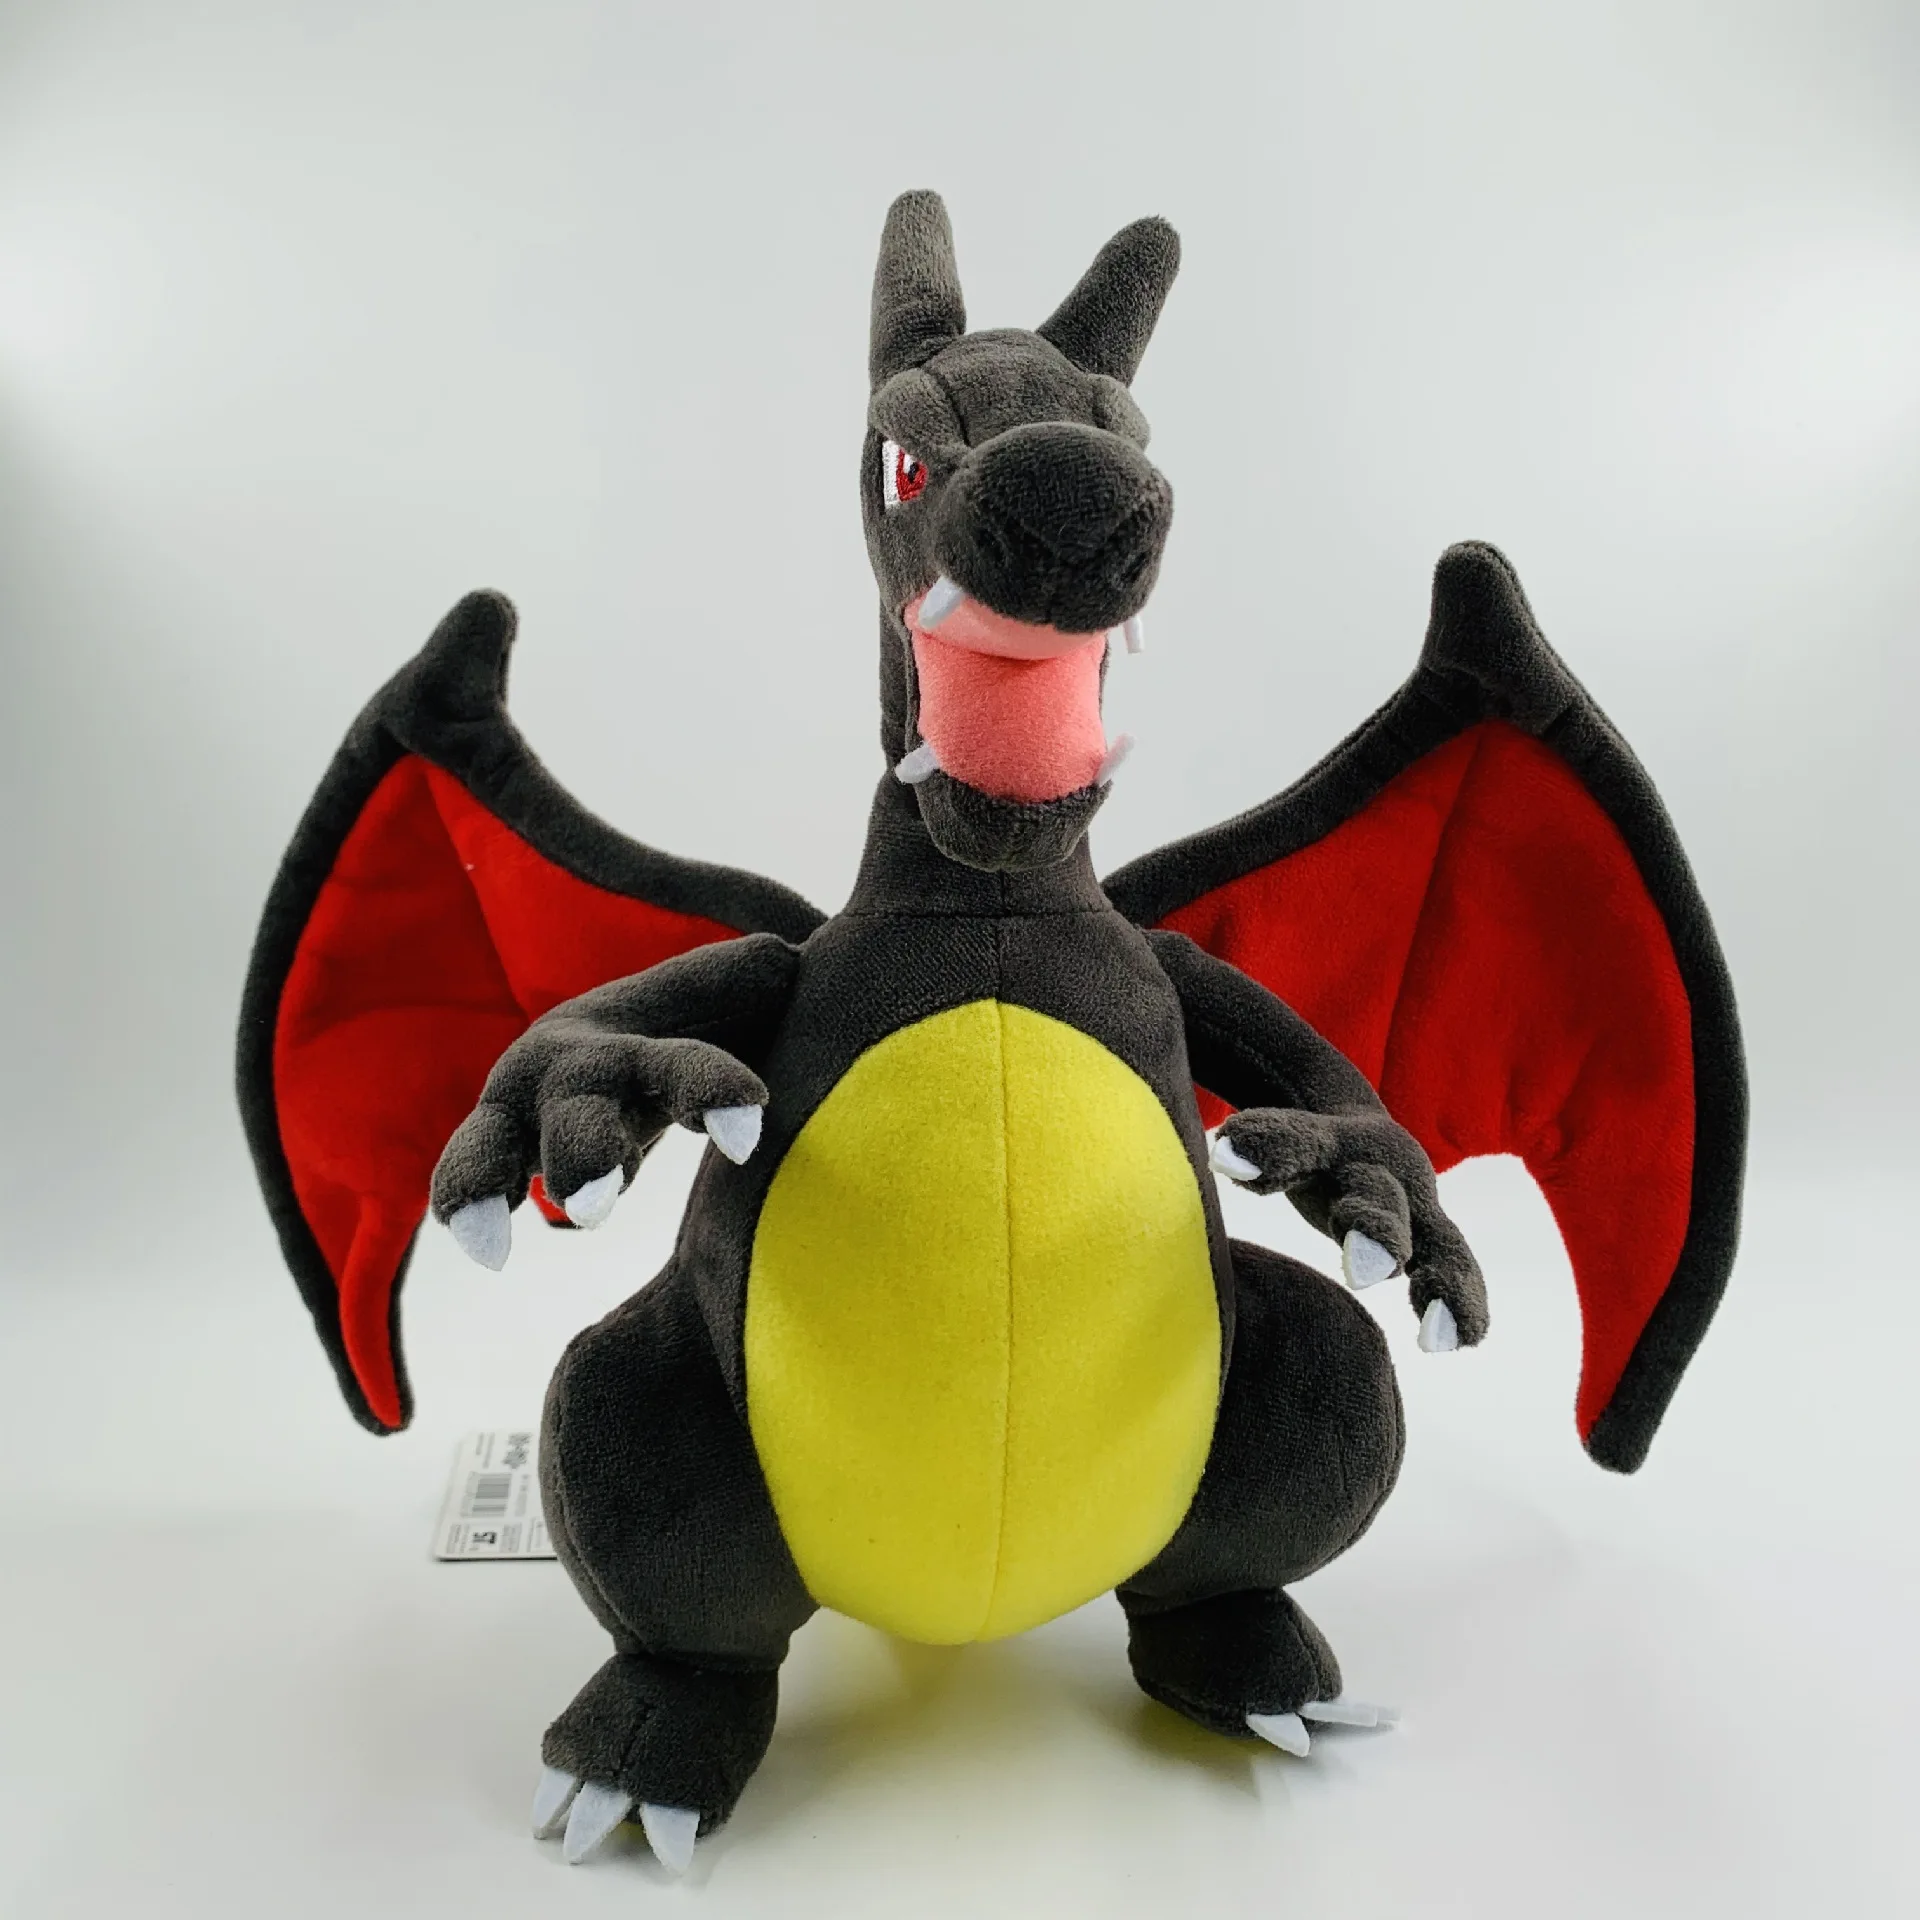 Pokémon Brilhante Charizard Brinquedos De Pelúcia, X Y, Fire Dragon, Anime  Movies, Posket Monster, Stuffed Toy, Birthday Gift, 8 Estilos